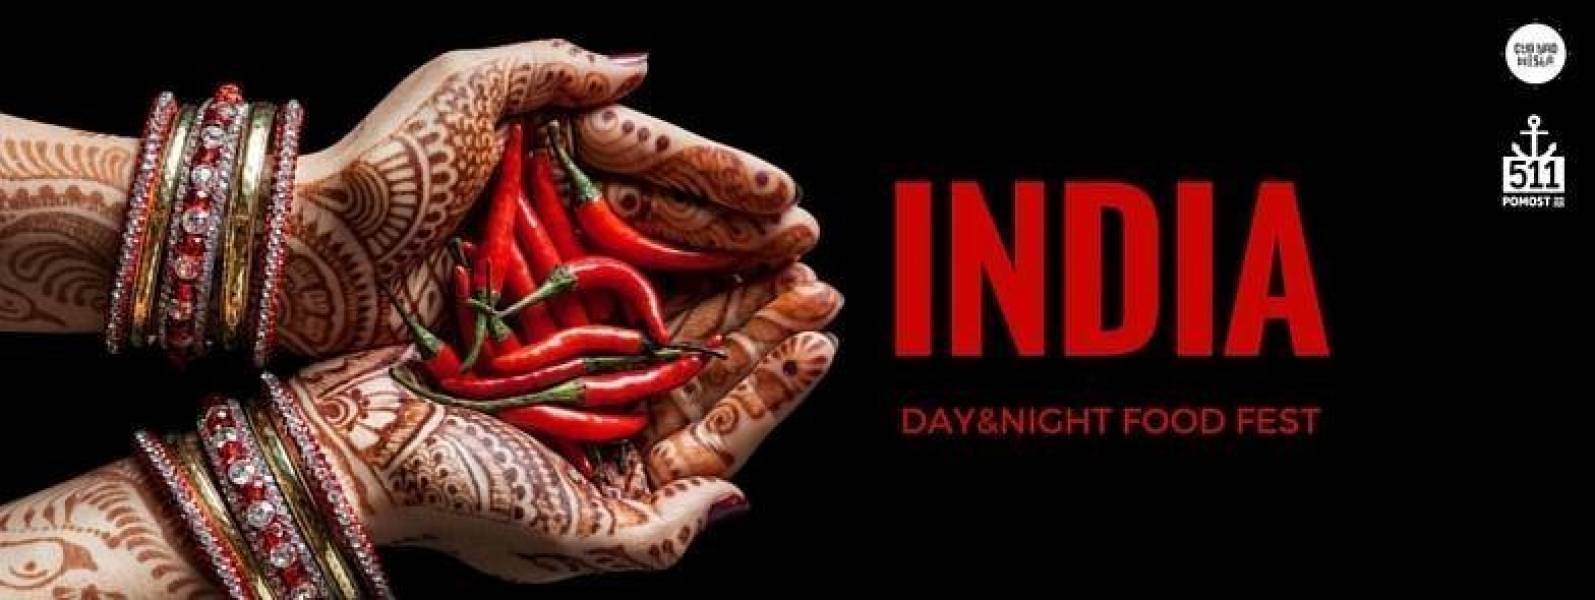 6 SIERPNIA – INDIA DAY & NIGHT FOOD FEST – WARSZAWA